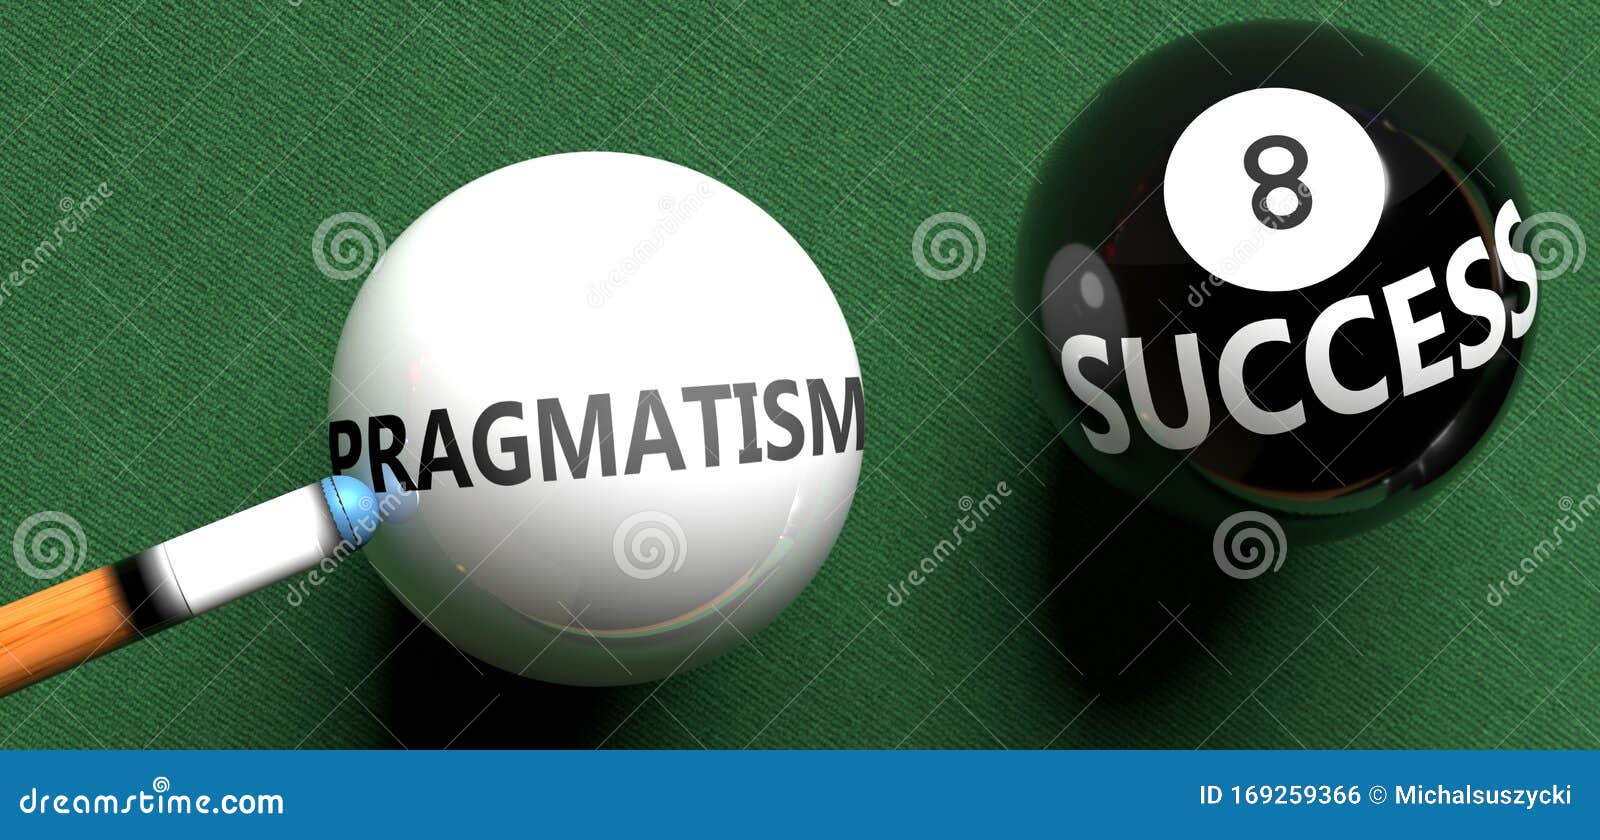 pragmatism brings success - pictured as word pragmatism on a pool ball, to ize that pragmatism can initiate success, 3d